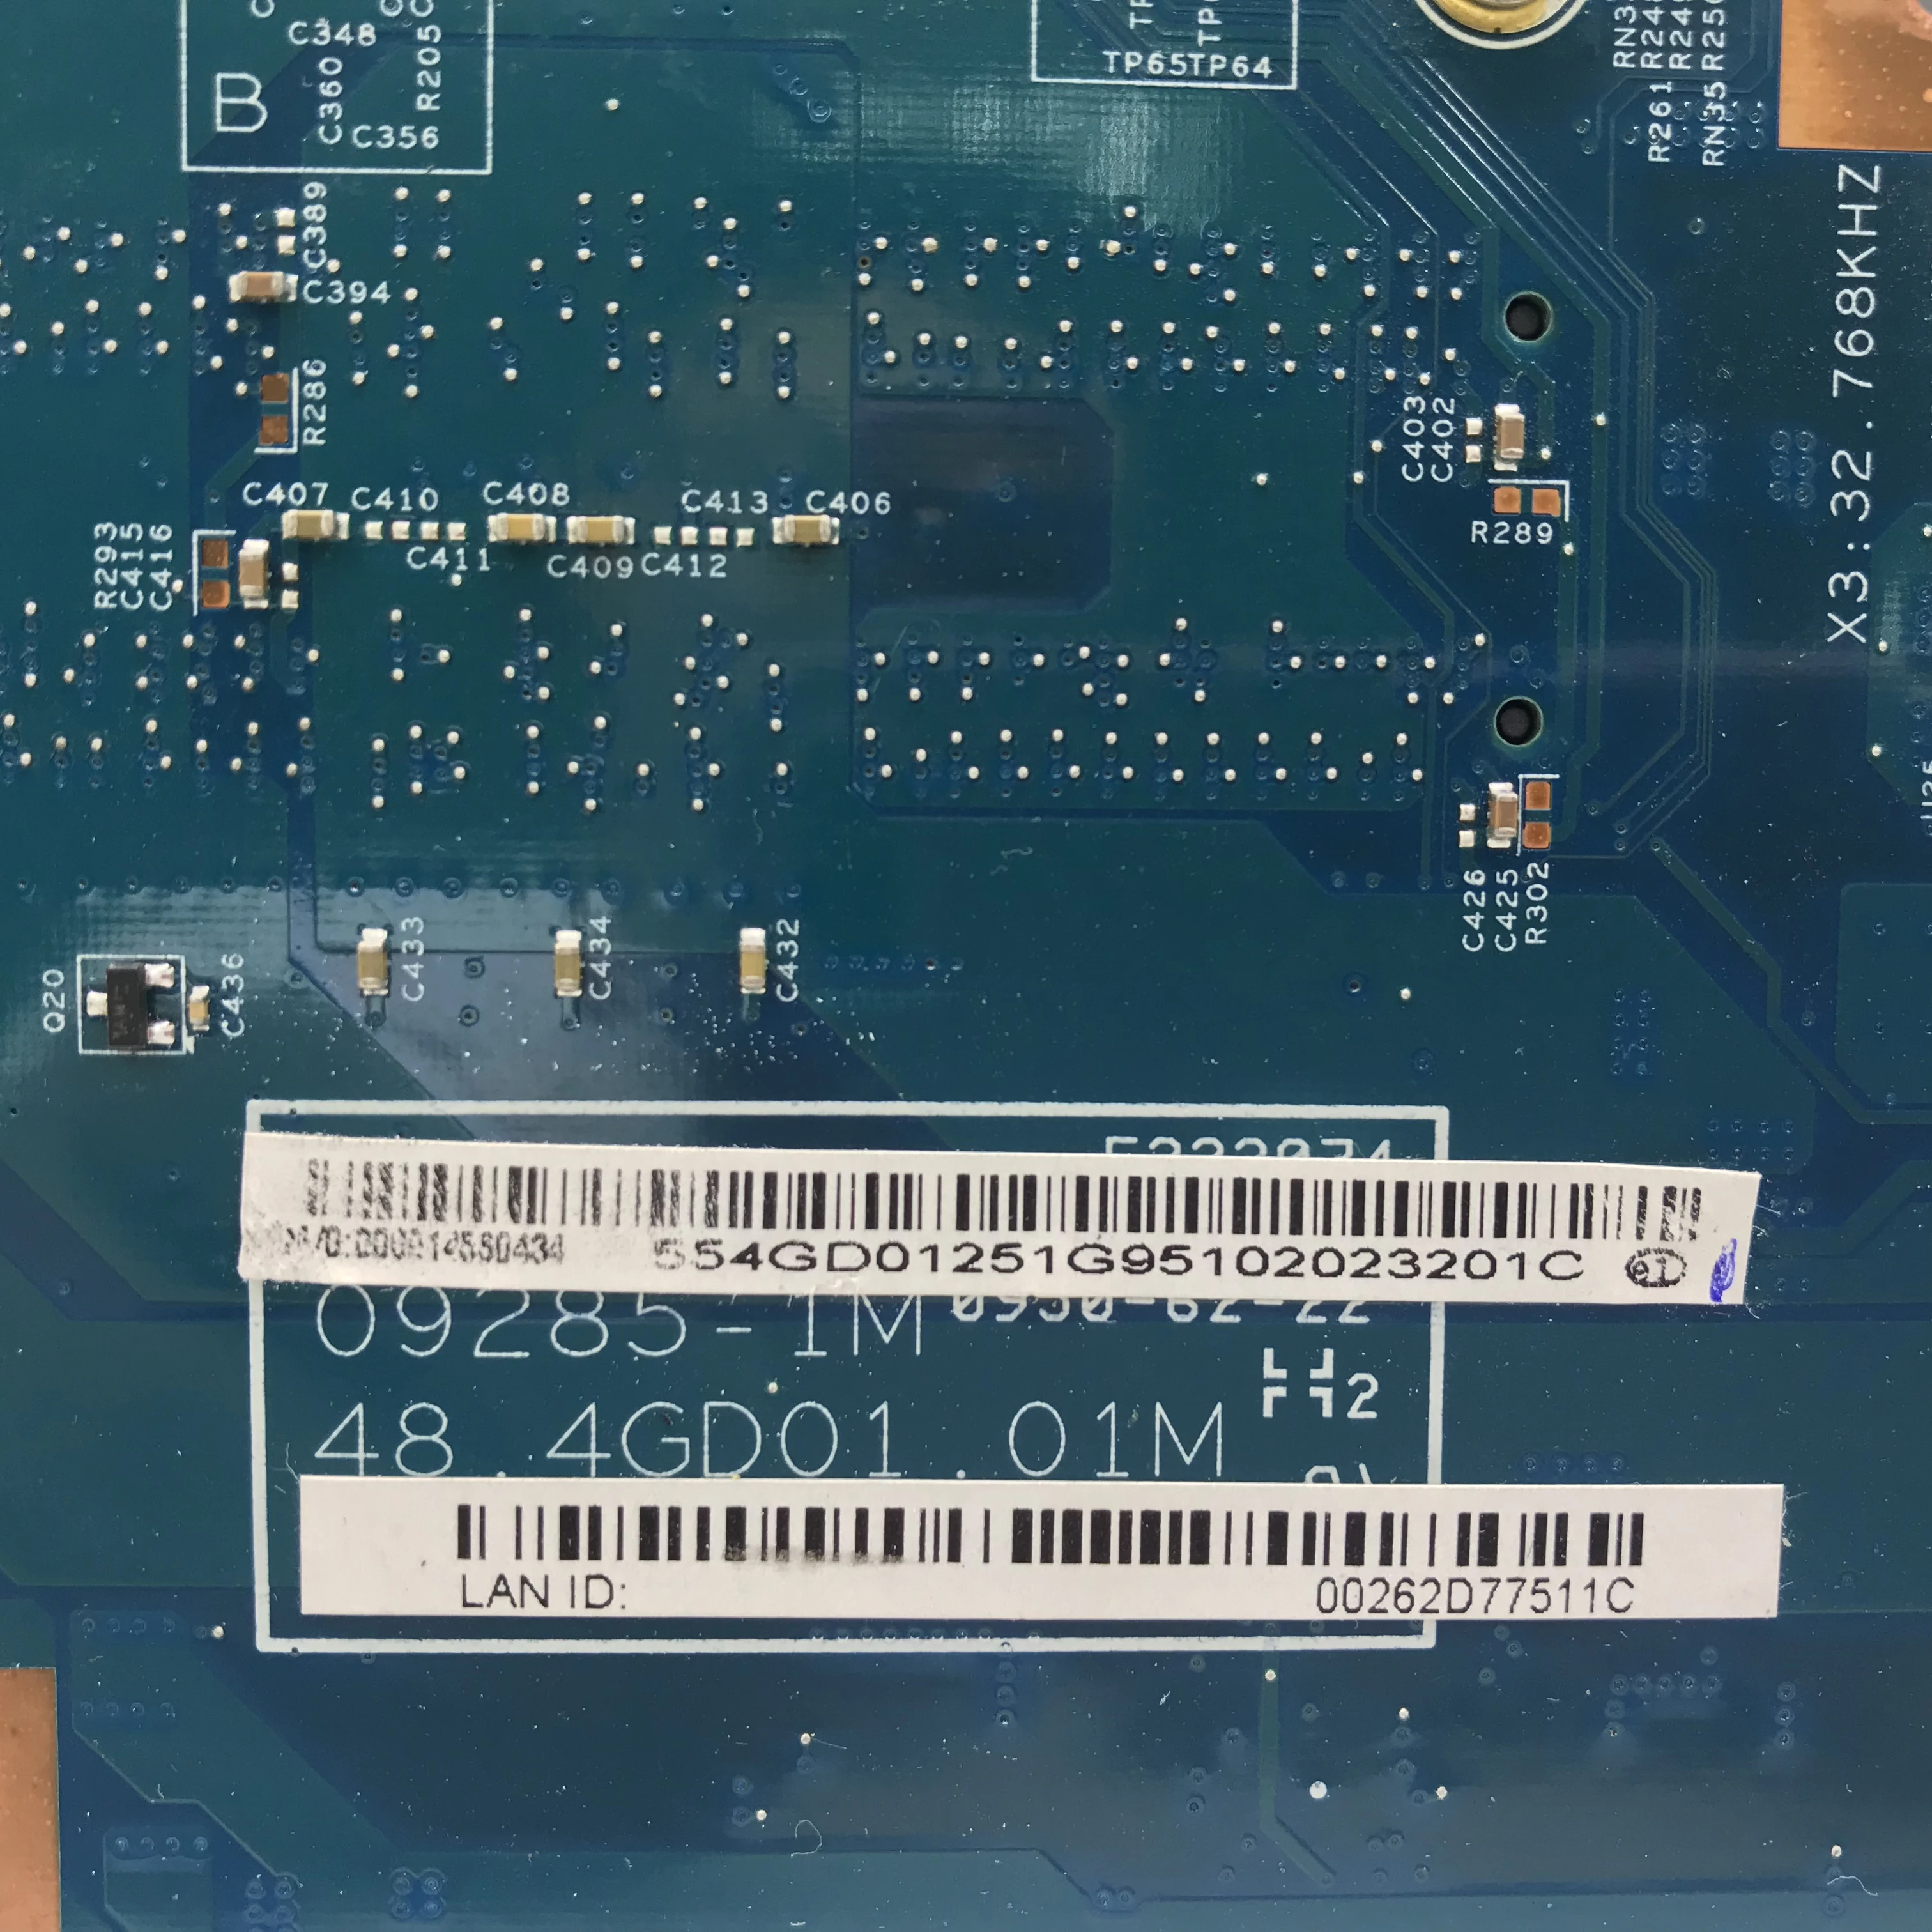 KEFU 5740G motherbaord Acer aspire 5740 5740G Plokštė 48.4GD01.01M 09285-1M HM55 DDR3 patikrintas originalus mianboard